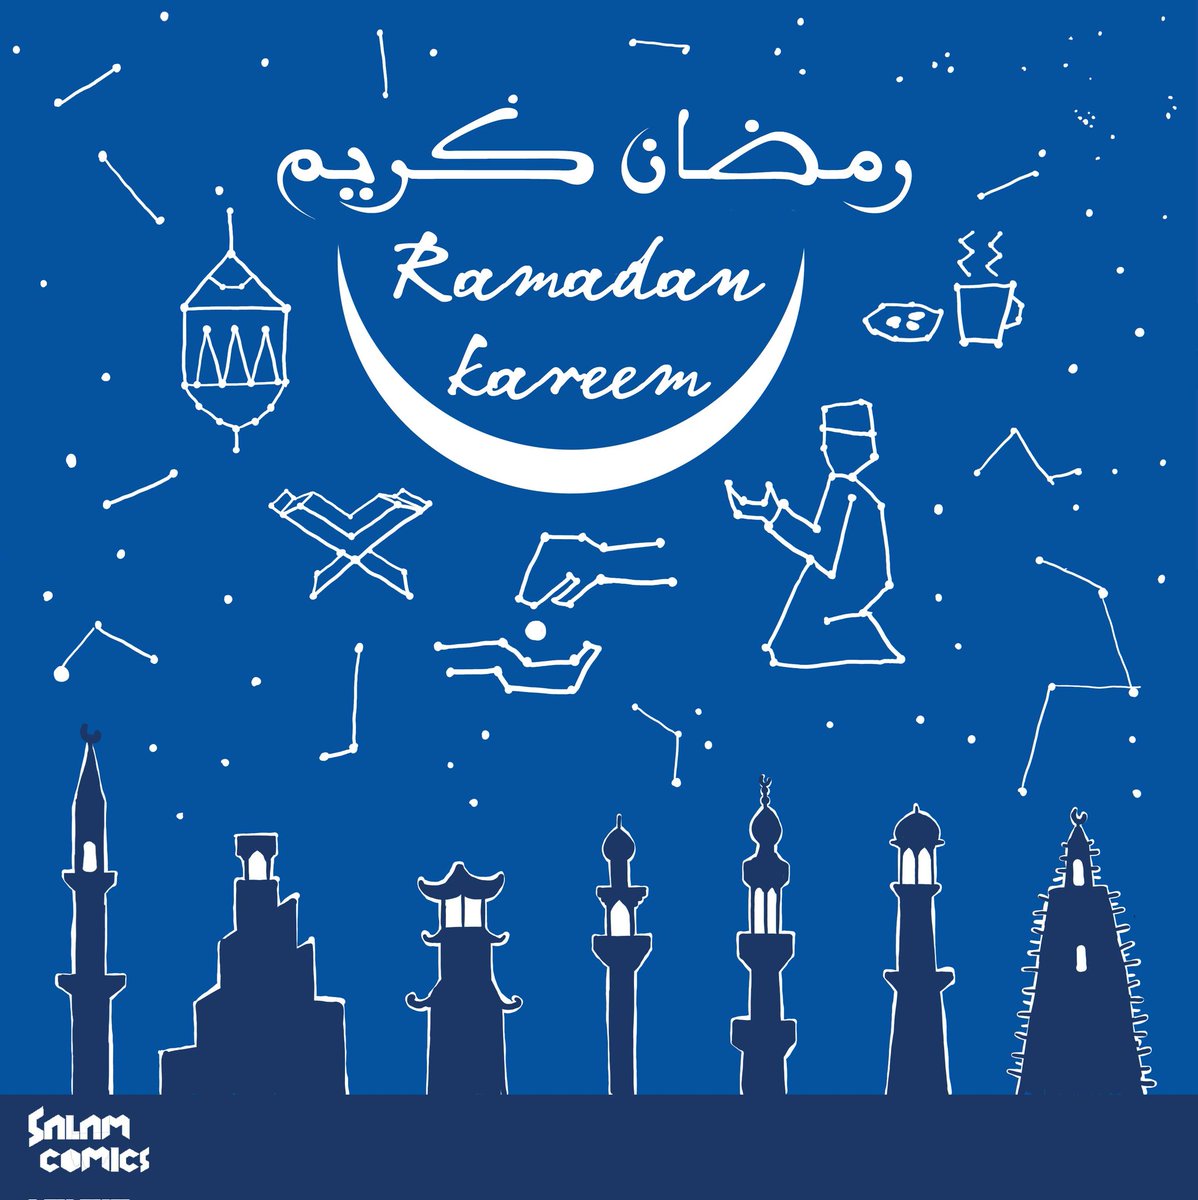 Wish you a blessing Ramadan full of khair and barakah. 
salamcomics.com

#Ramadan #ramadan2022 #ramadanbooks #ramadankareem #ramadankareem🌙 #muslimbookstagram #islamicbooks #Muslimbooks #deen #islamicbookstore #dawah #art #Islamicart #ramadangifts #ramadanmubarak